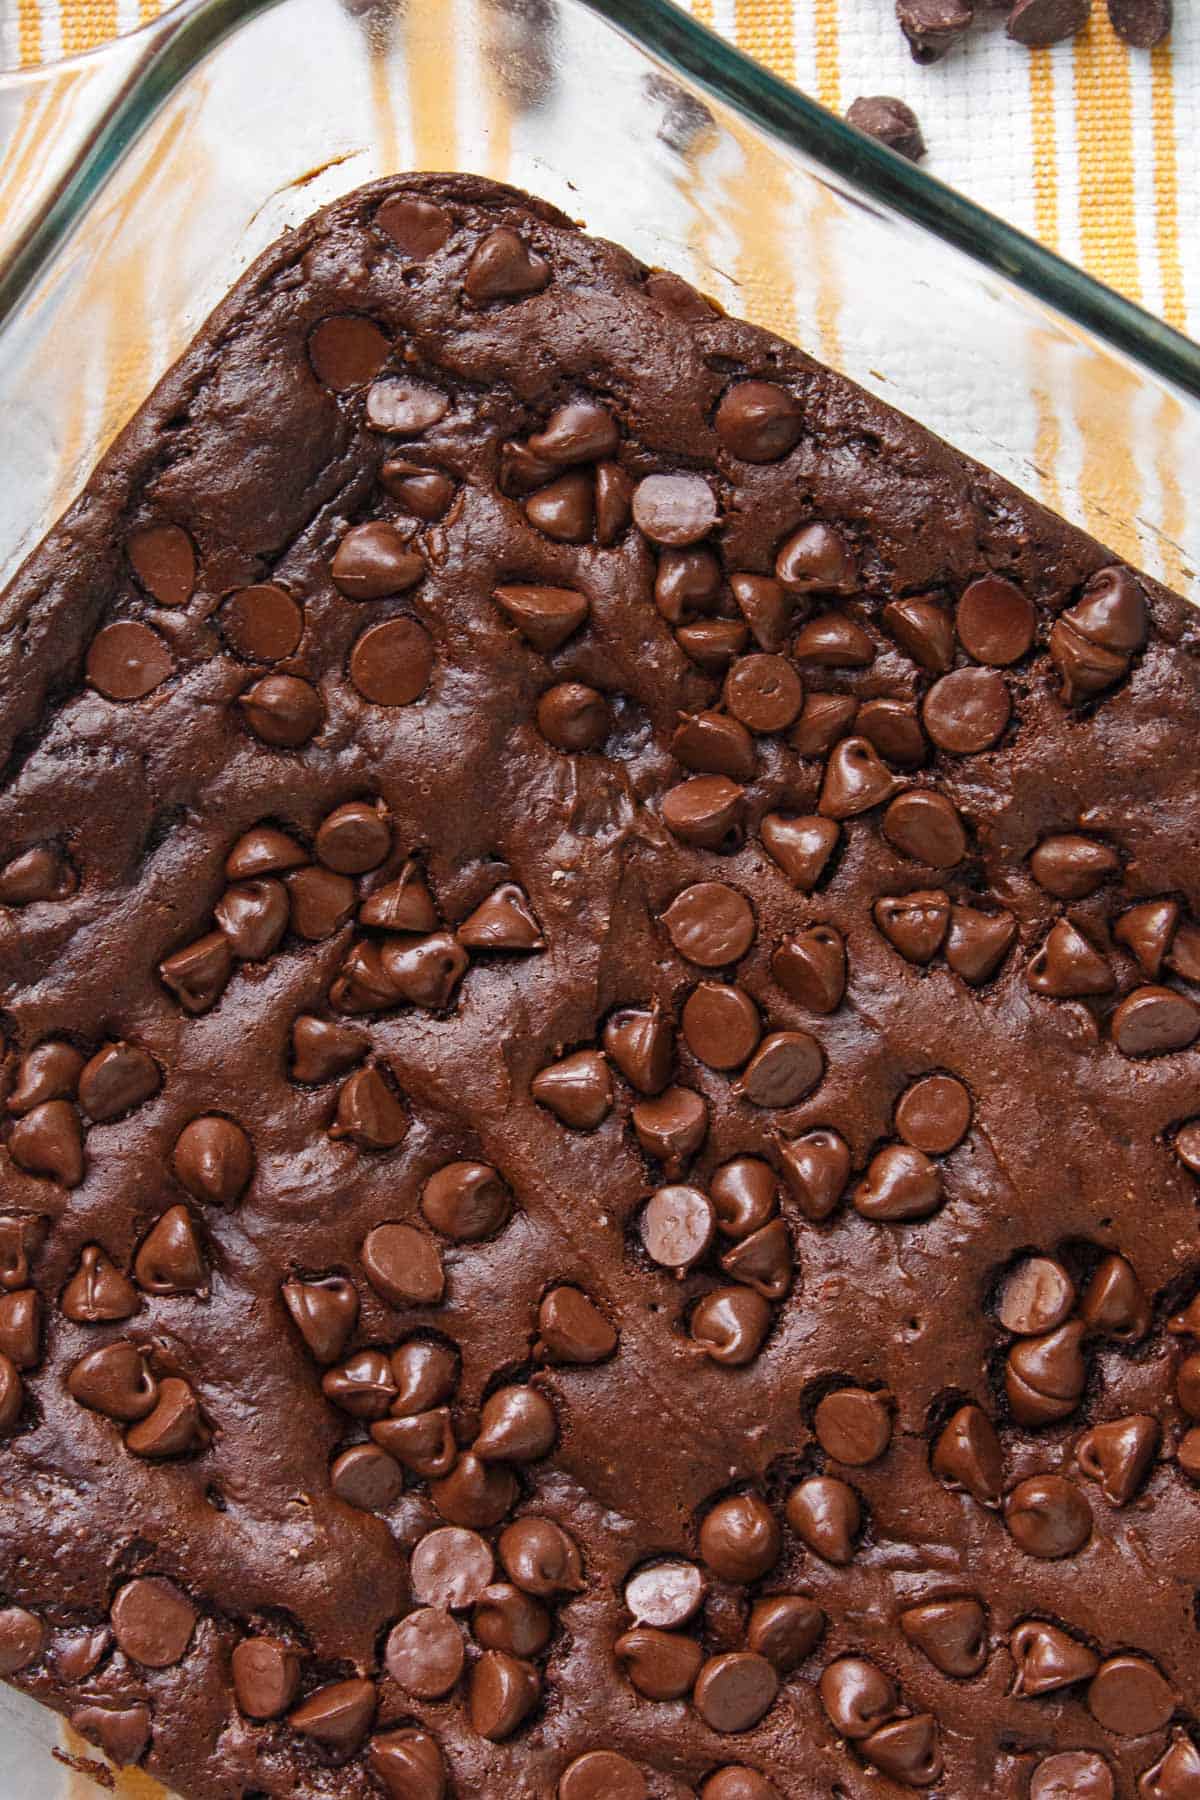 4-Ingredient Chocolate Dump Cake